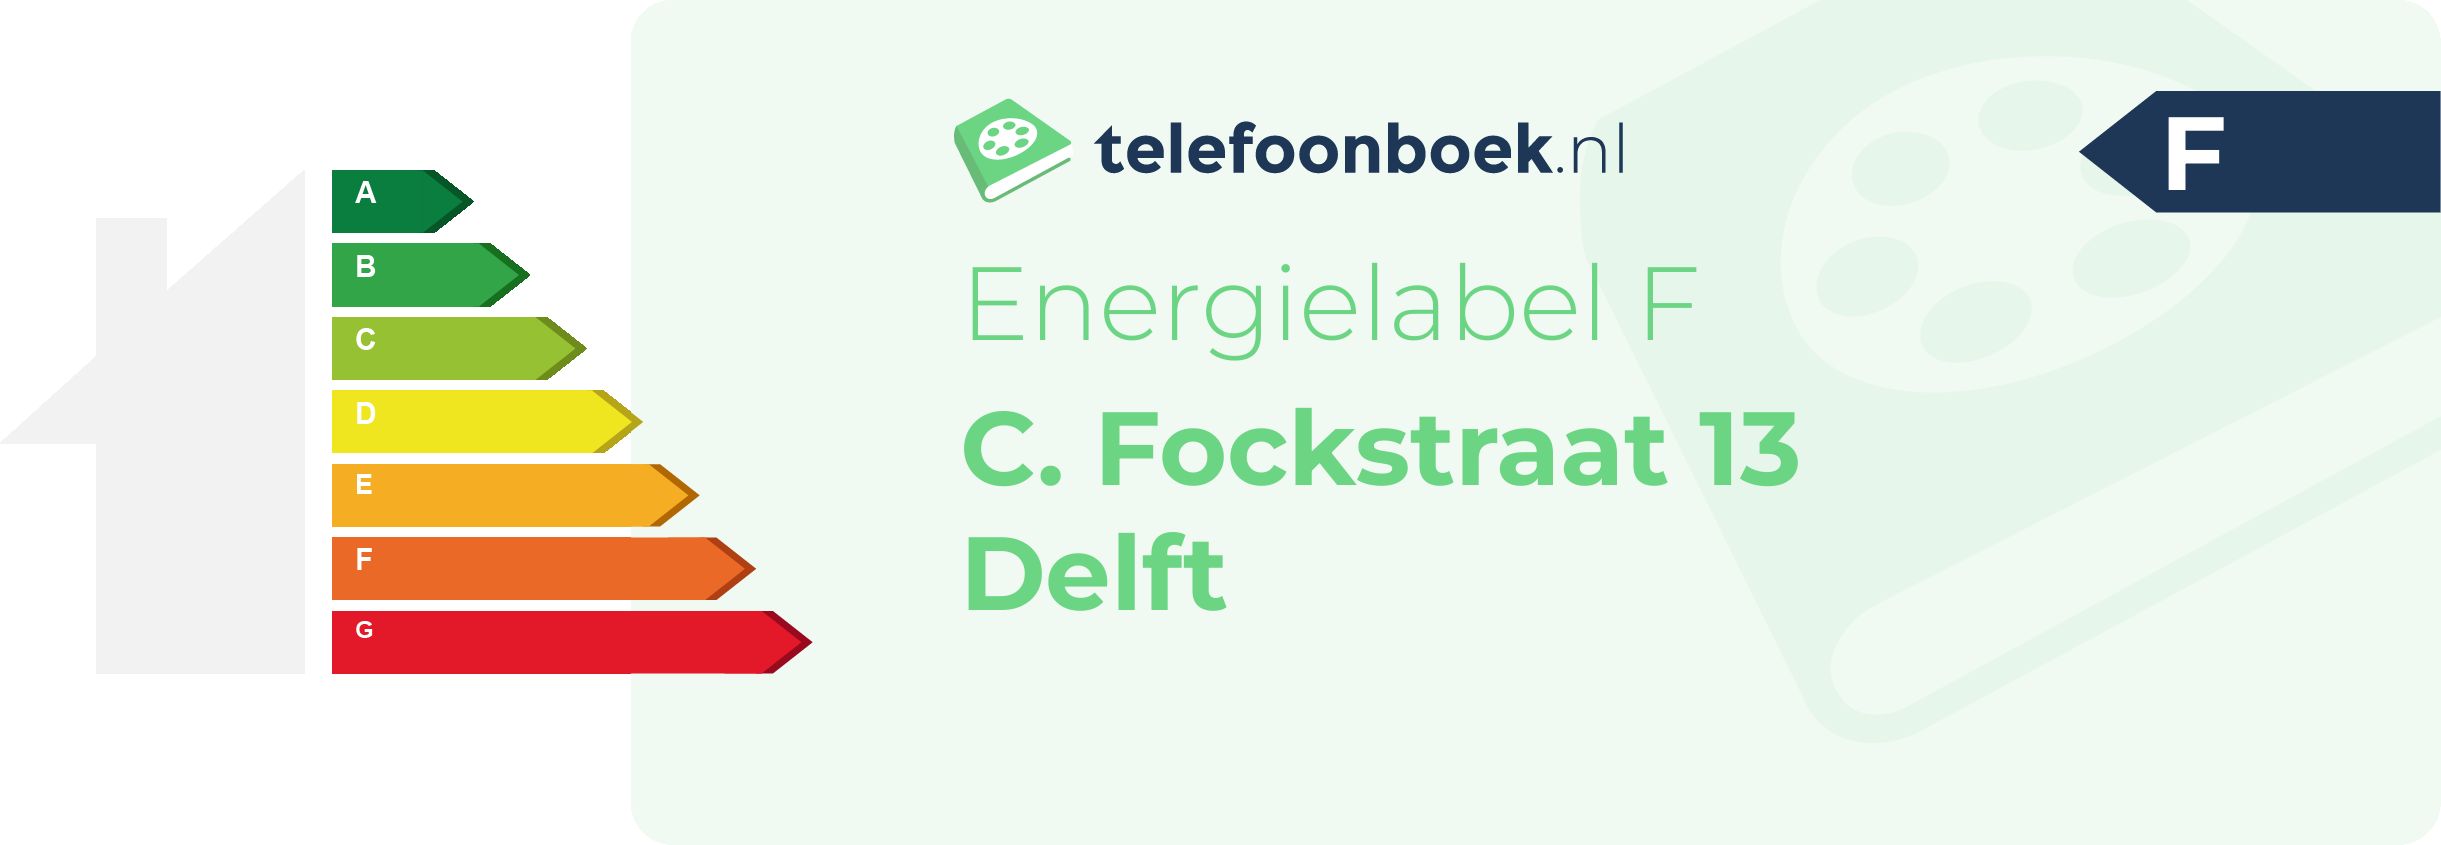 Energielabel C. Fockstraat 13 Delft